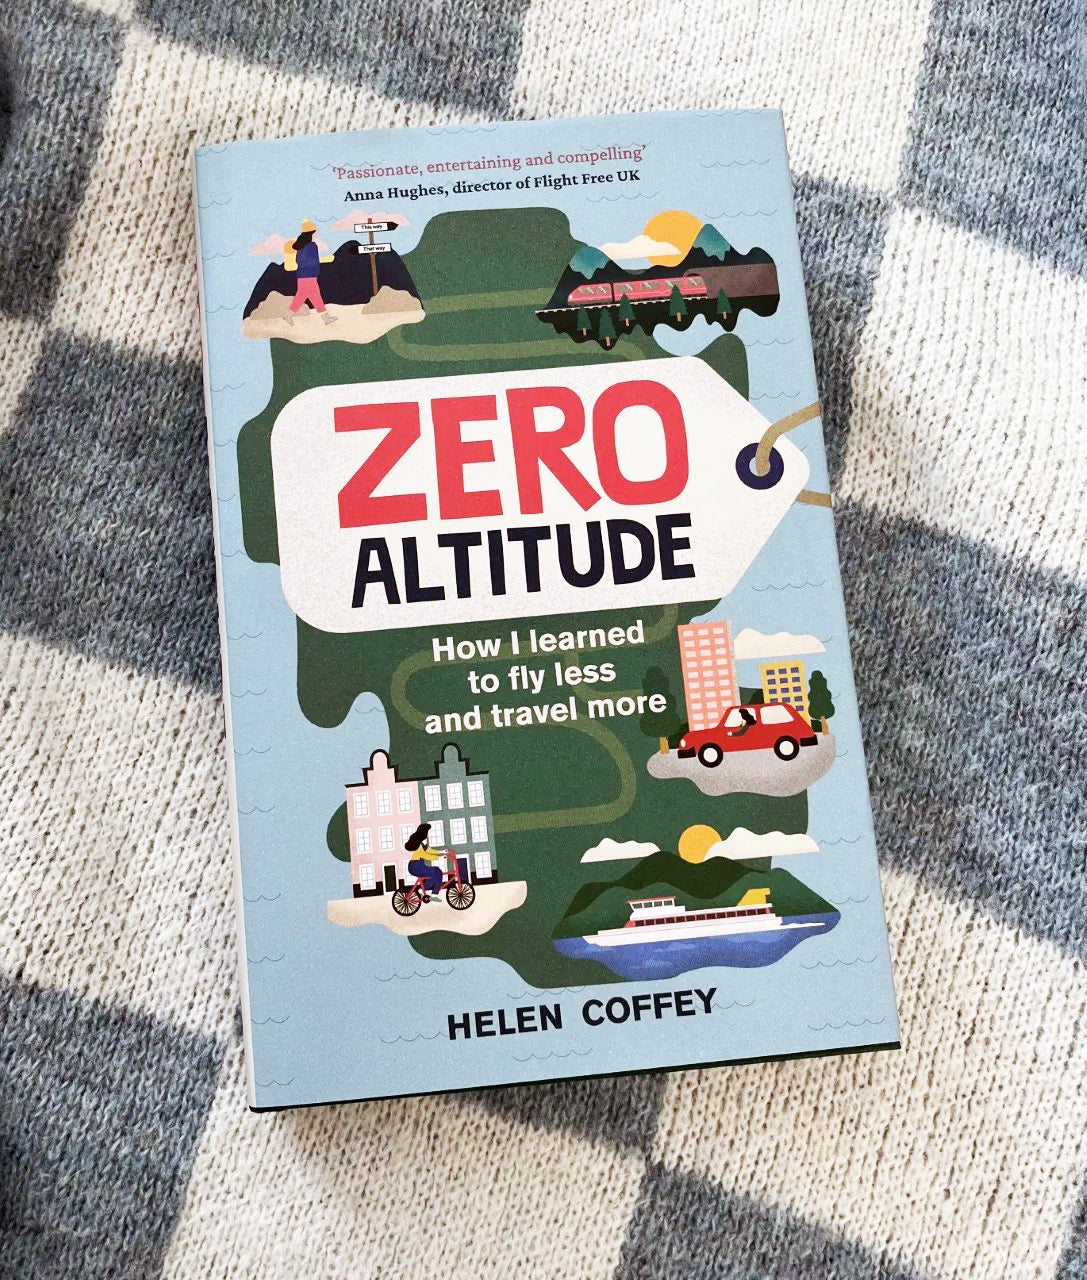 Coffey’s new book, Zero Altitude, investigates the climate impact of flying